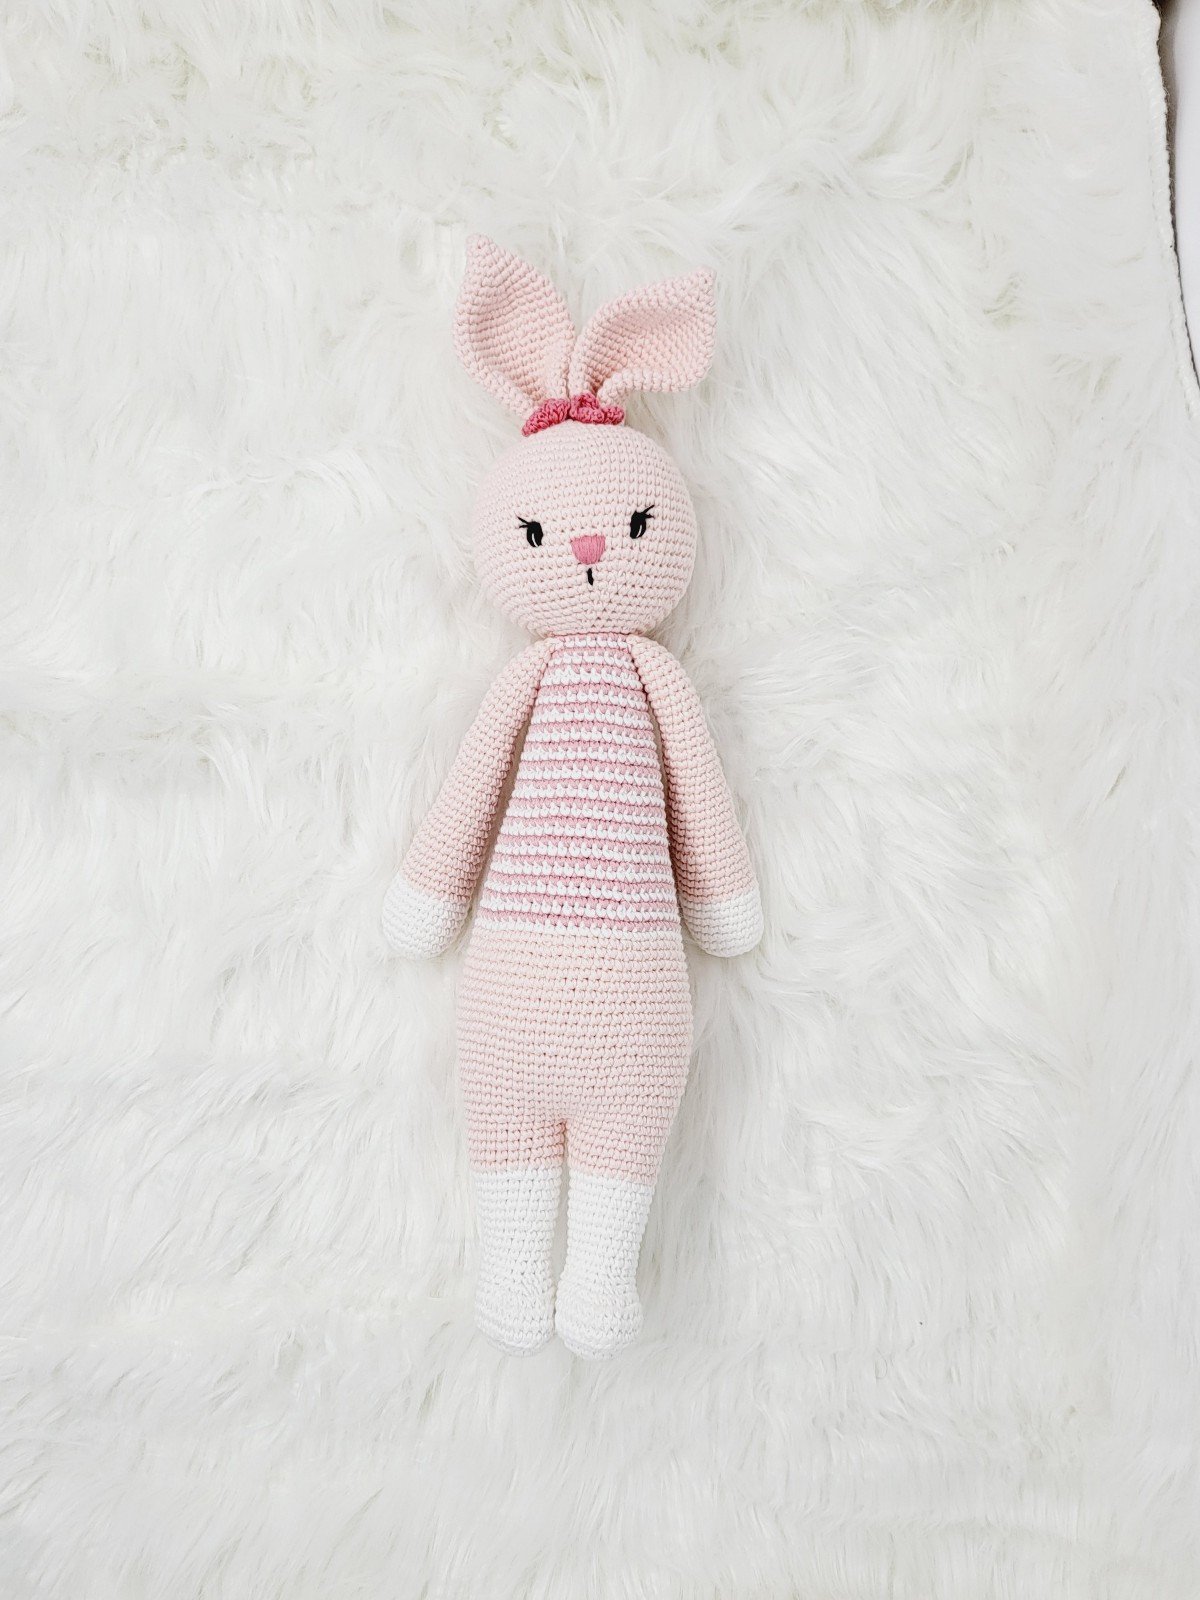 Large bunny pink crochet dQbtP9su1